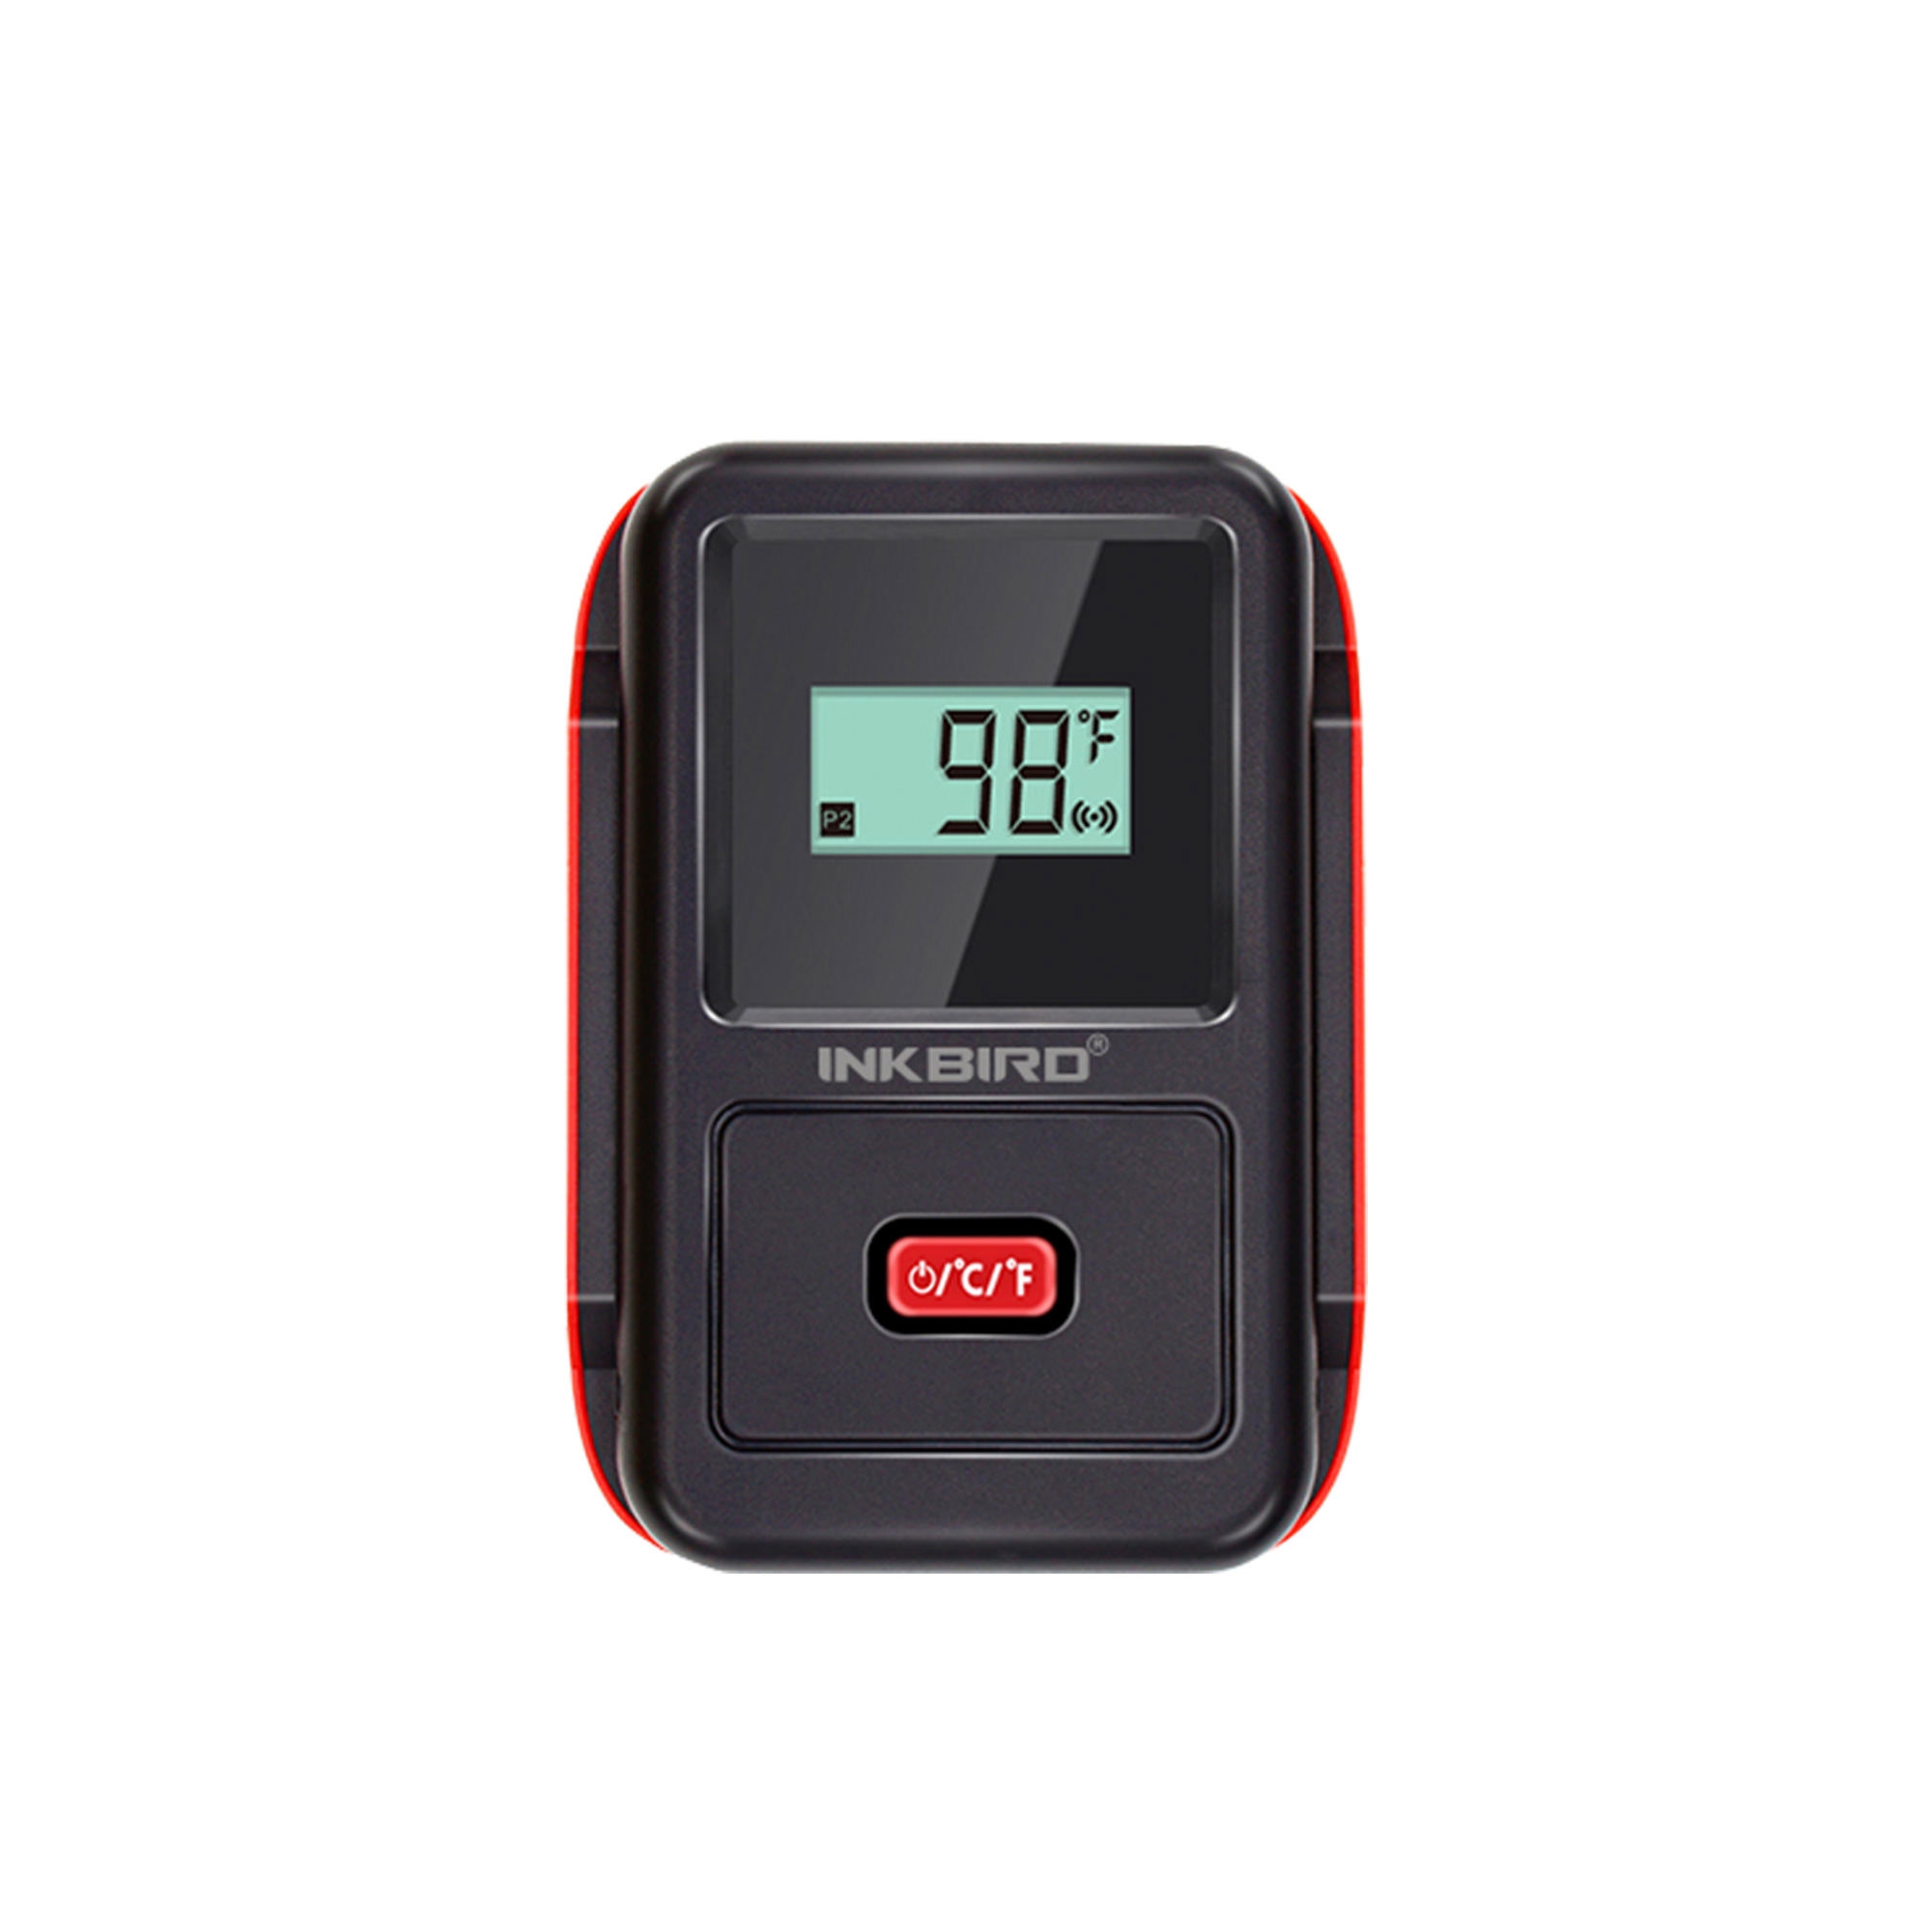 Inkbird IRF-2S Digital Wireless Thermometer 2 Probe Image 1